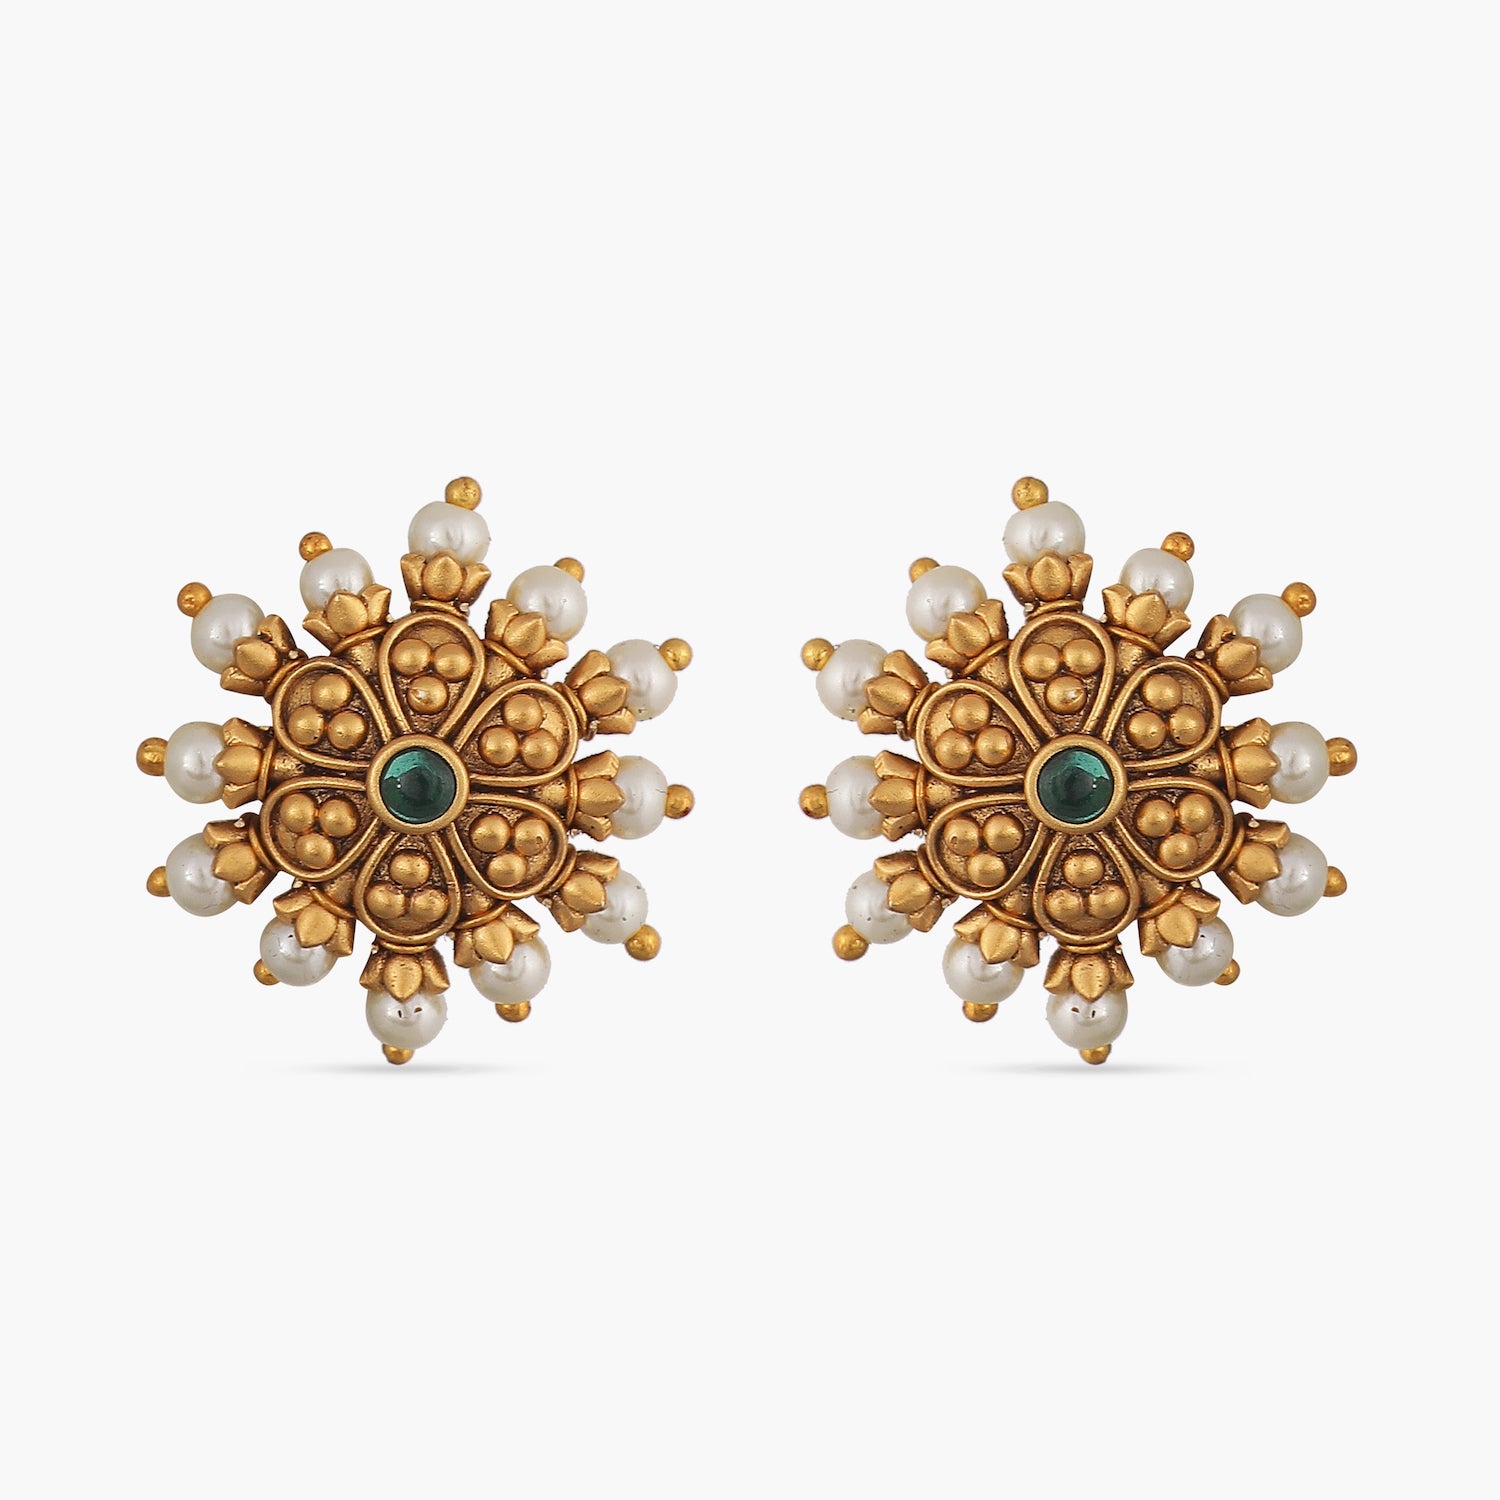 50 Beautiful Gold Antique Earrings Designs/Light weight gold antique temple earrings  design - YouTube